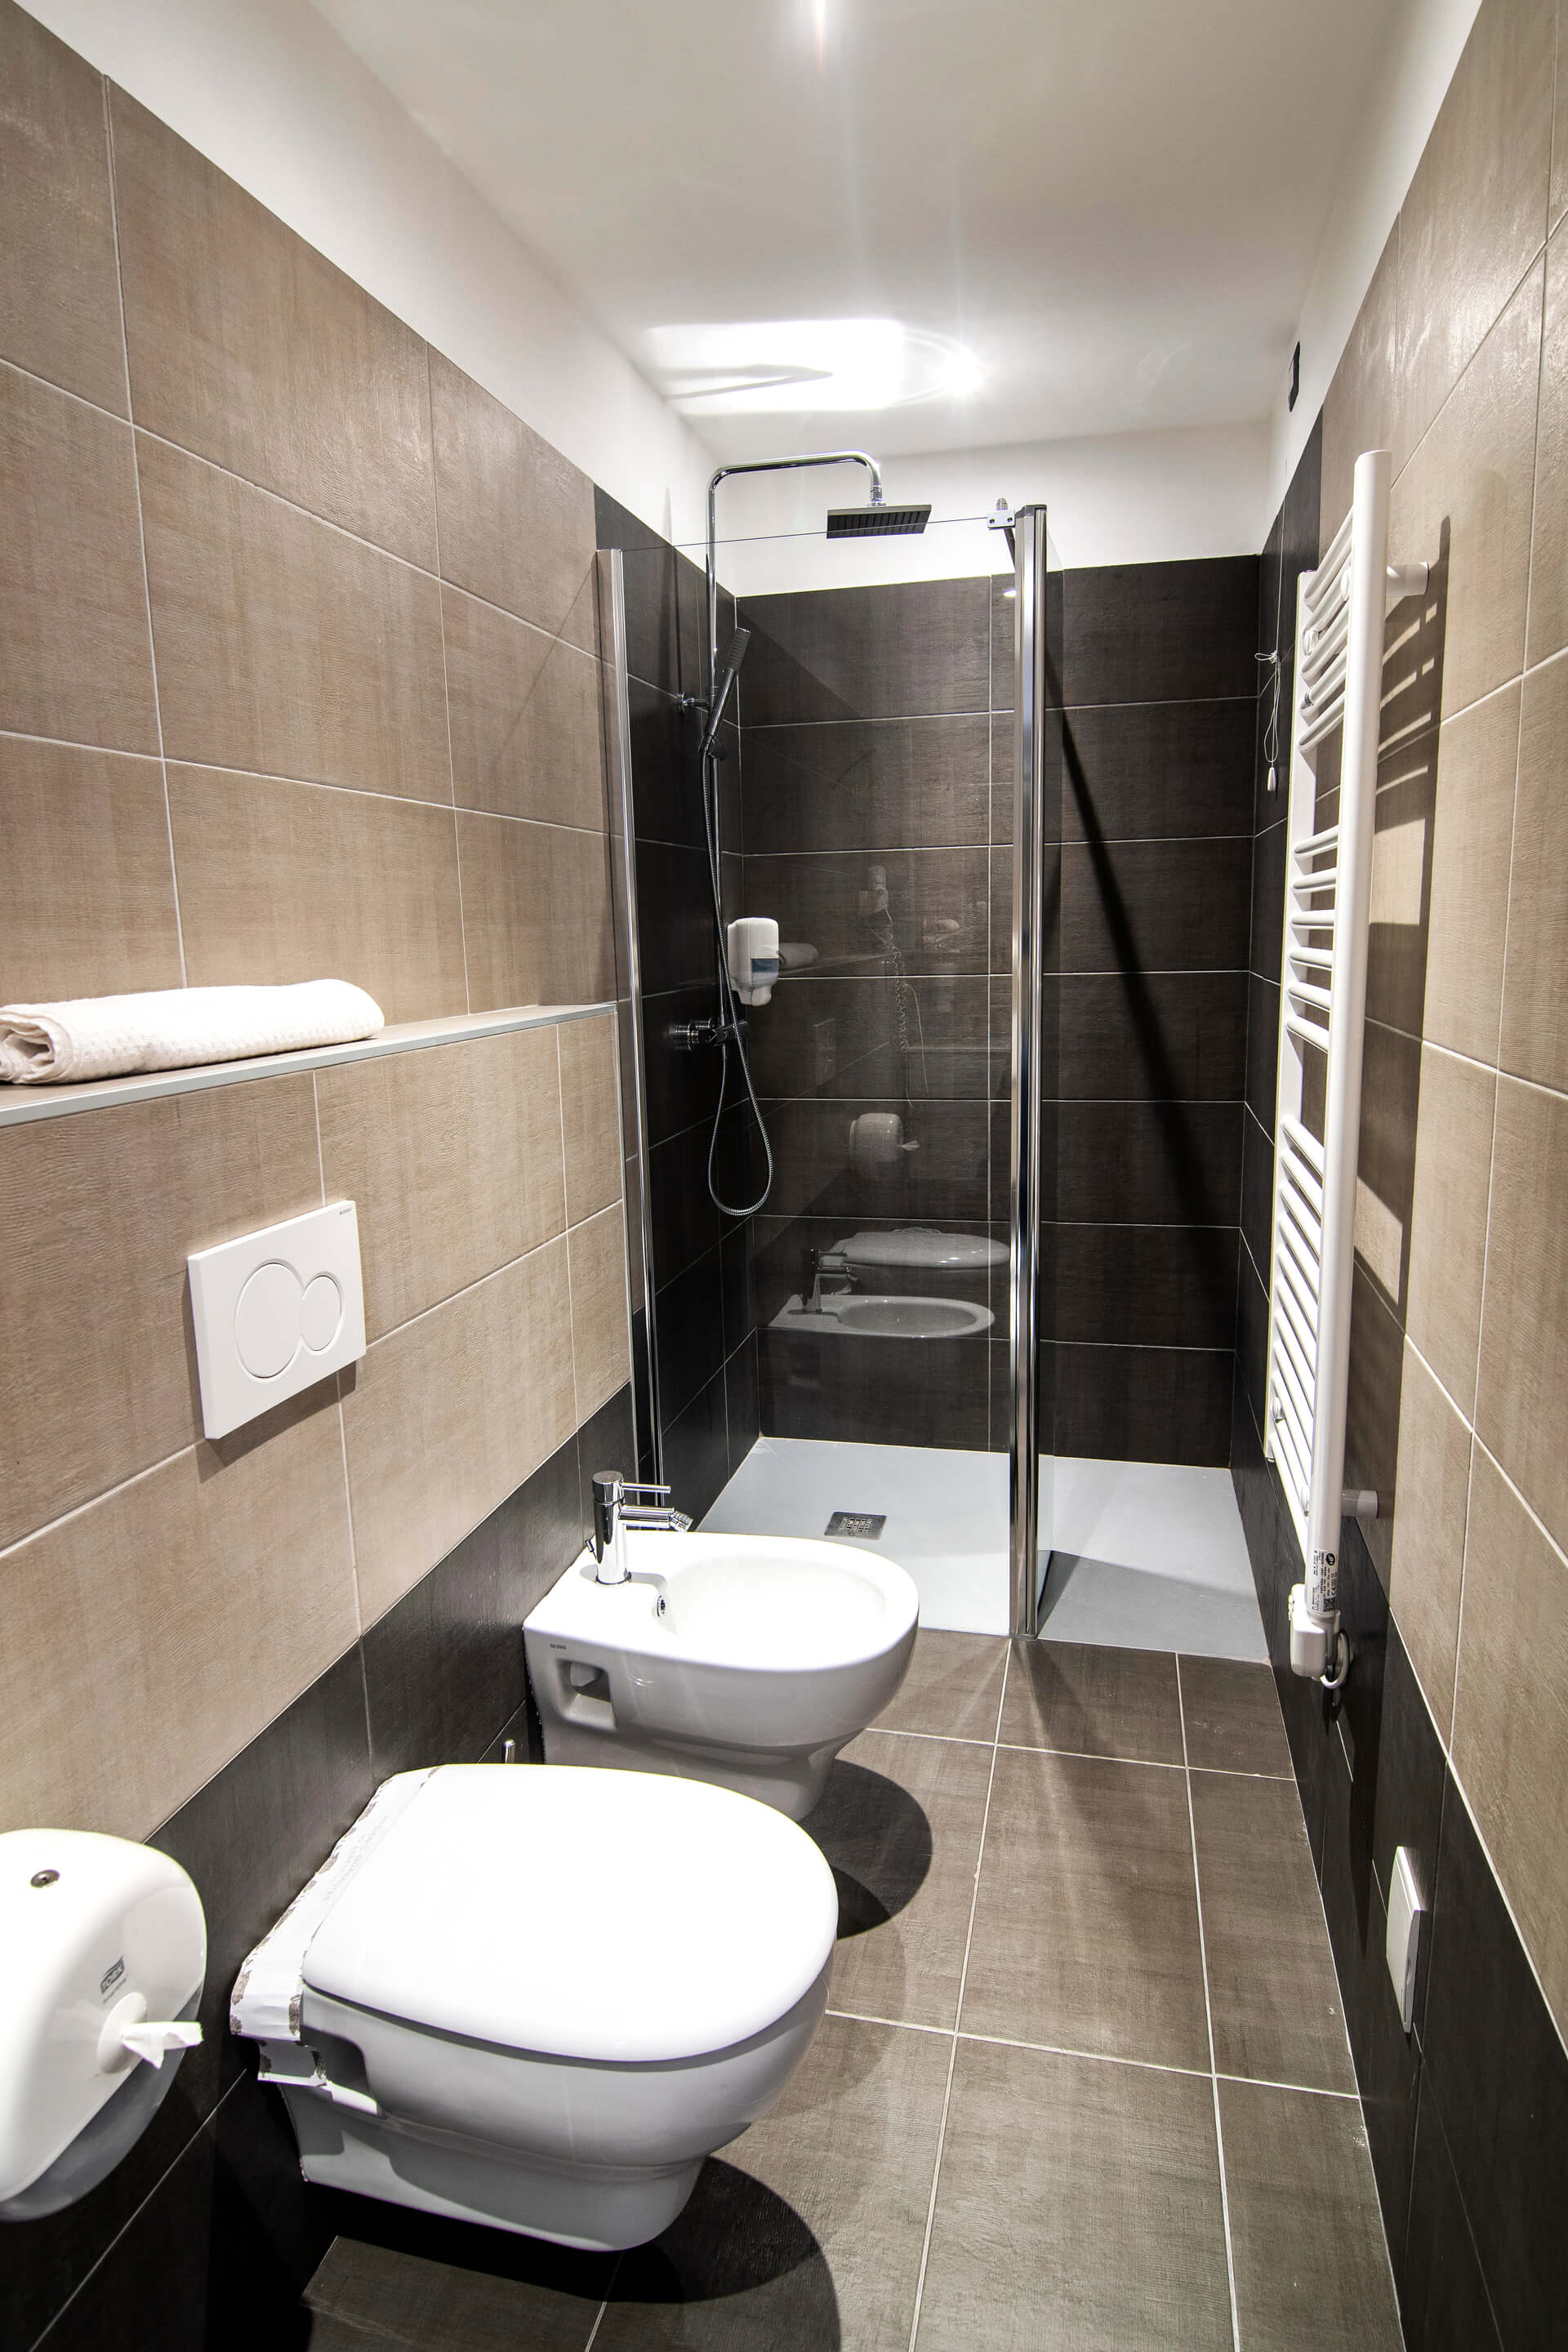 Bathroom of the classic double room of Hotel Saligari